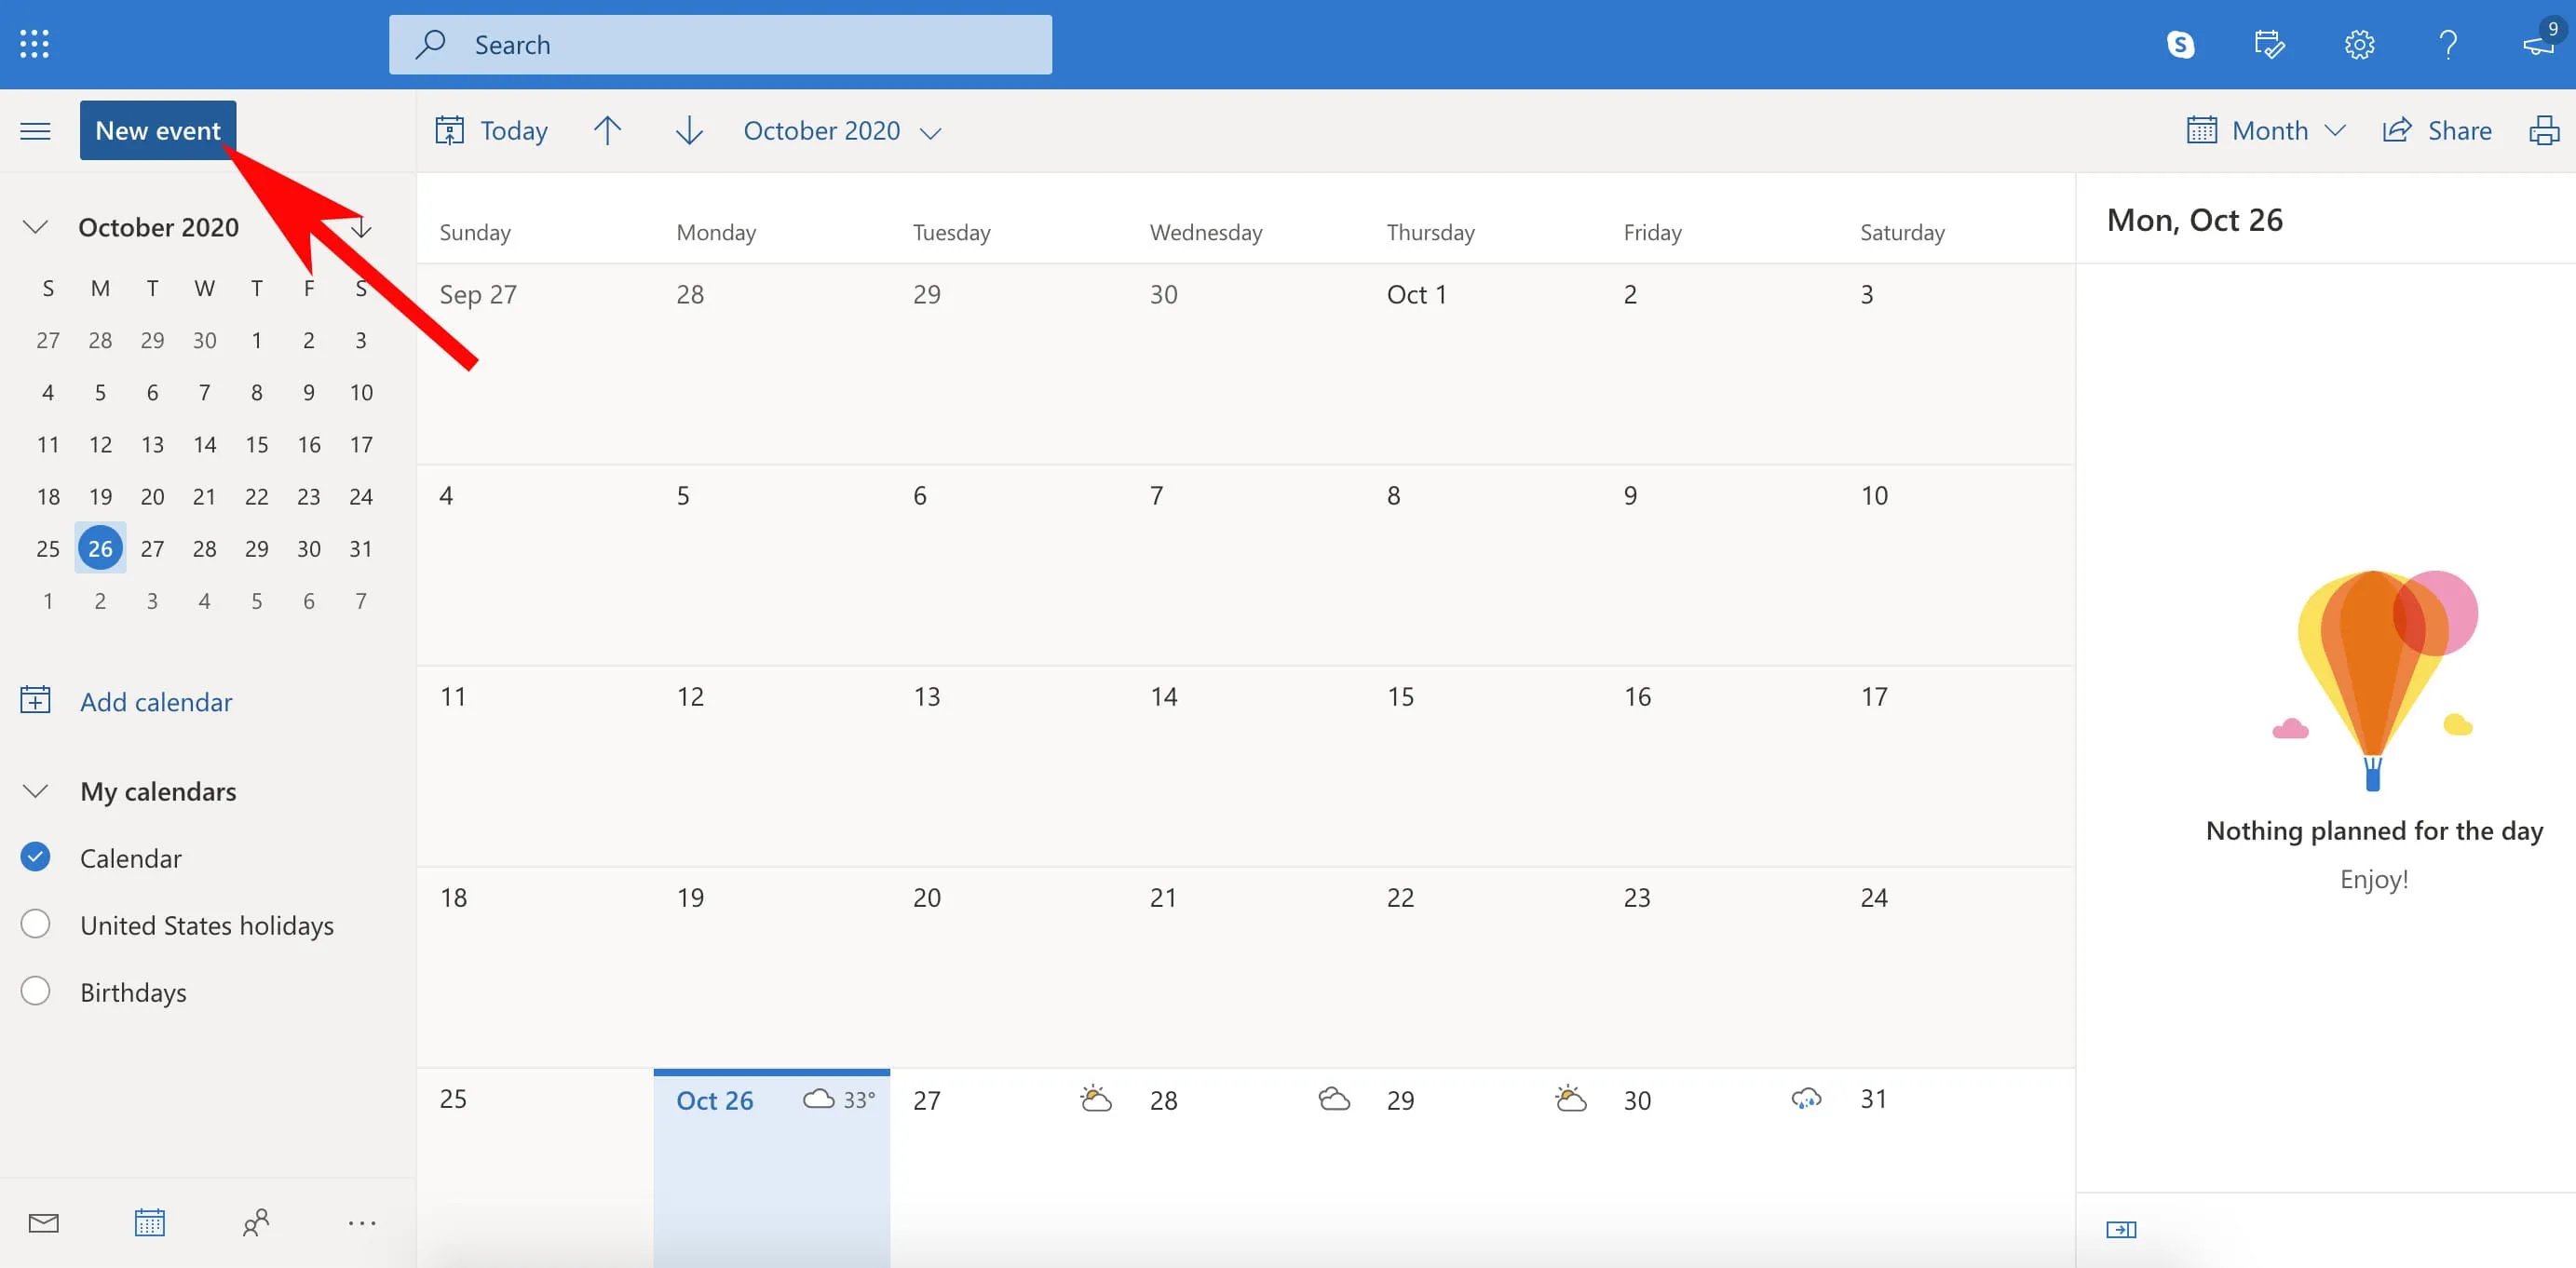 calendar invites 6.webp?width=2766&height=1363&name=calendar invites 6 - How to Send a Calendar Invite with Google Calendar, Apple Calendar &amp; Outlook